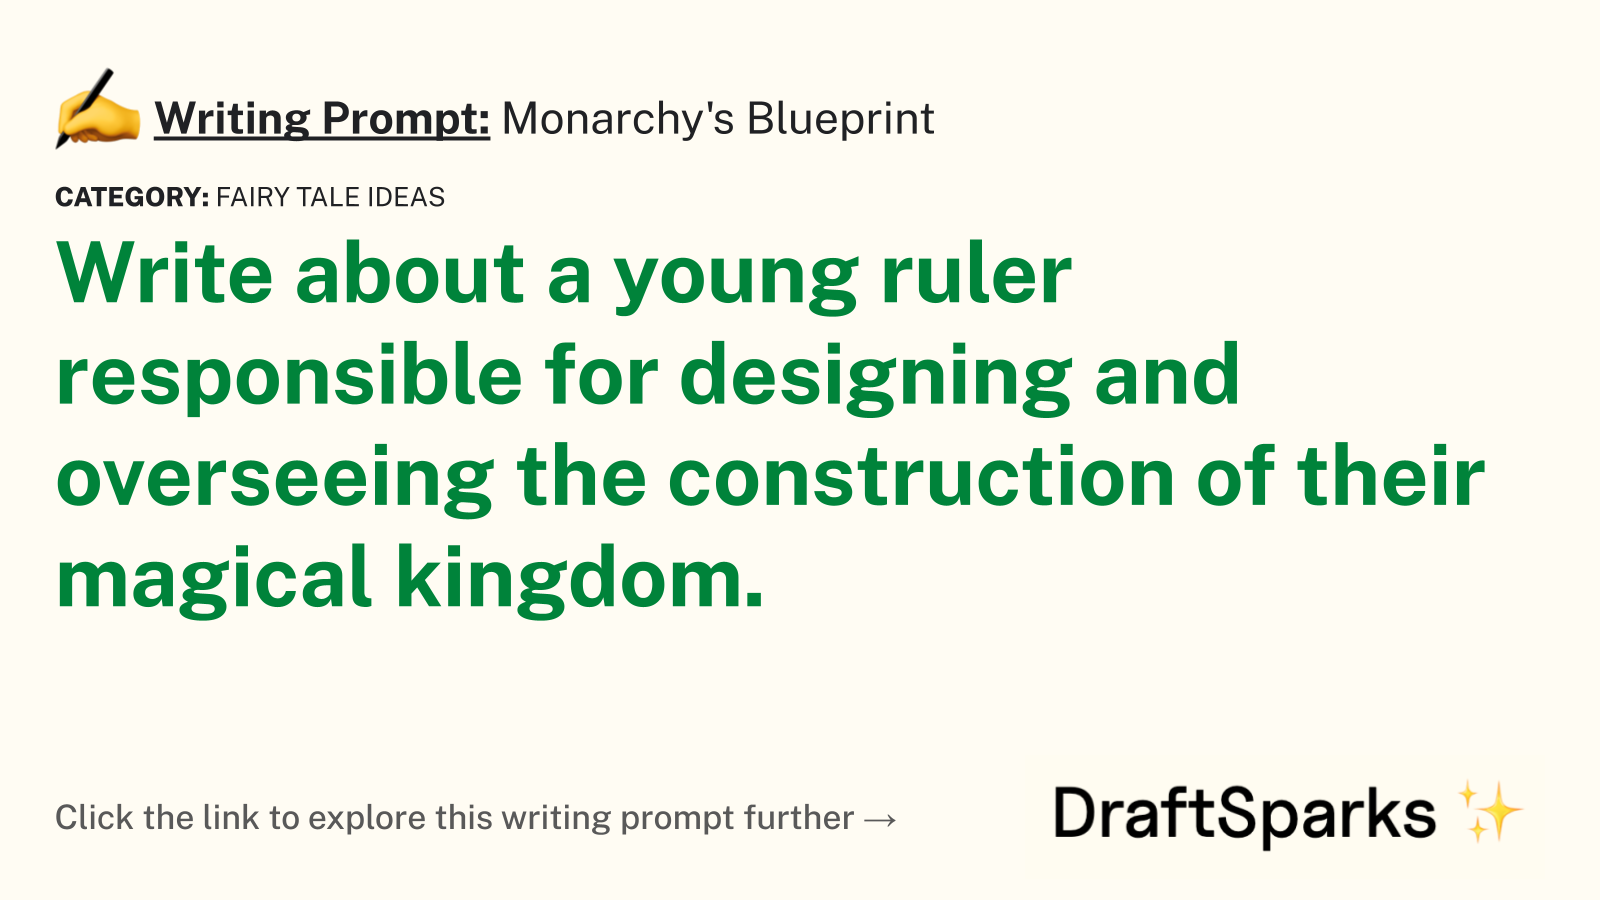 Monarchy’s Blueprint